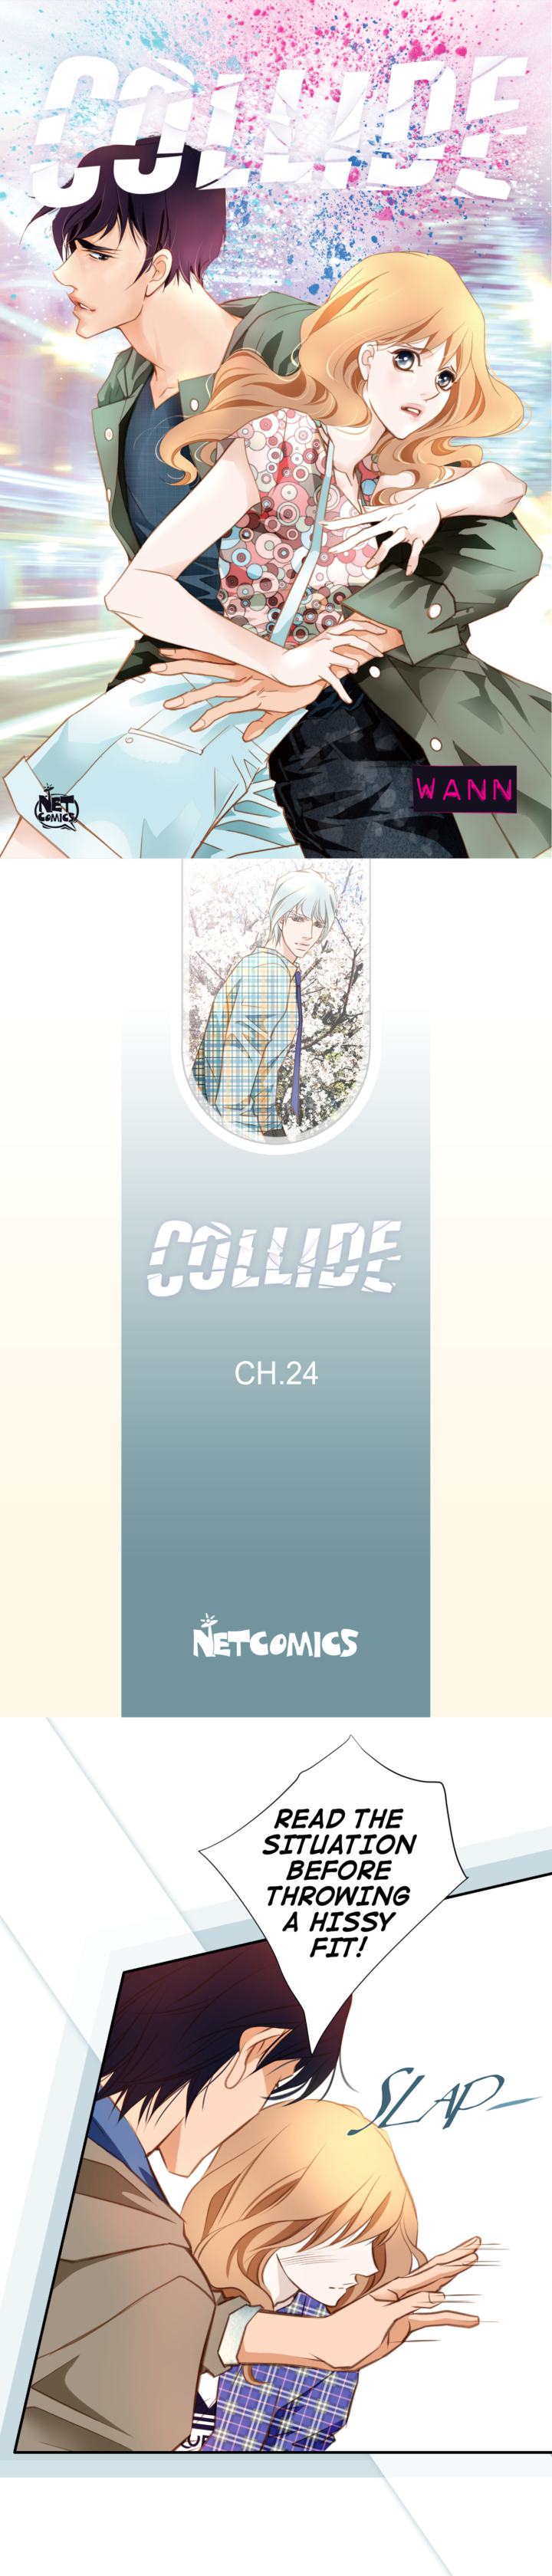 Collide Ch.24